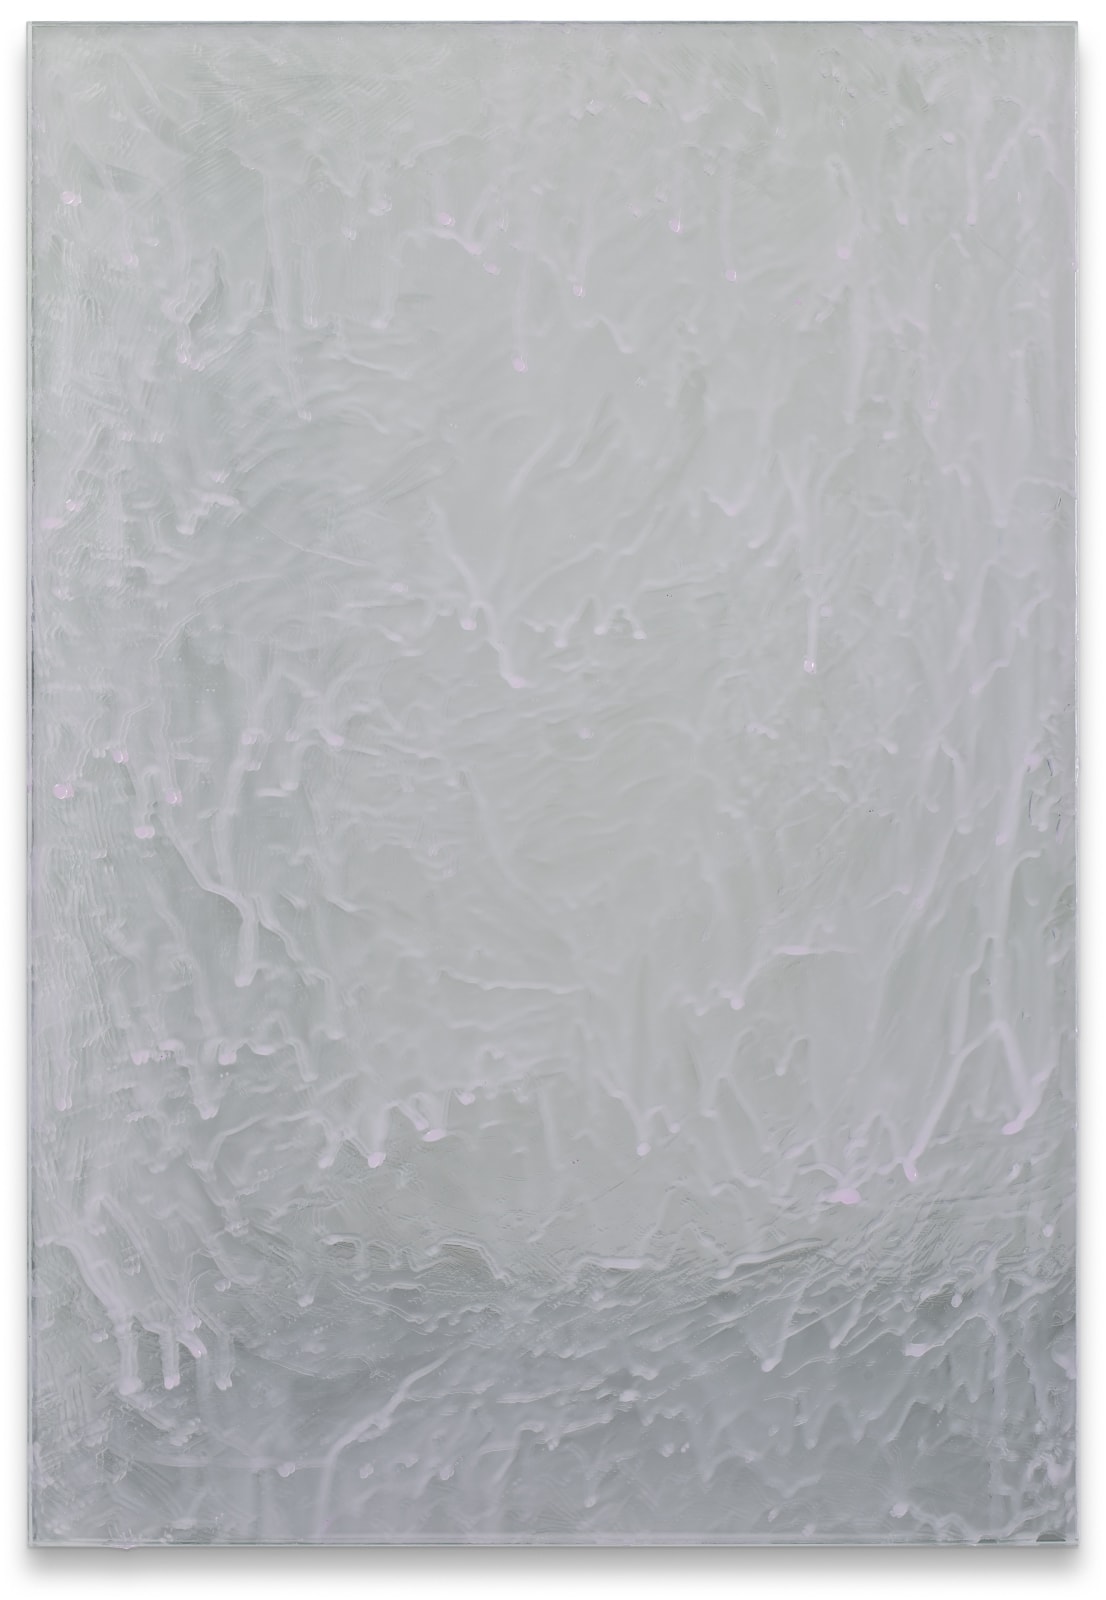 Pamela Rosenkranz, Anamazon (Lactic Source), 2021, medium and pigments on mirror, 60 × 42 cm